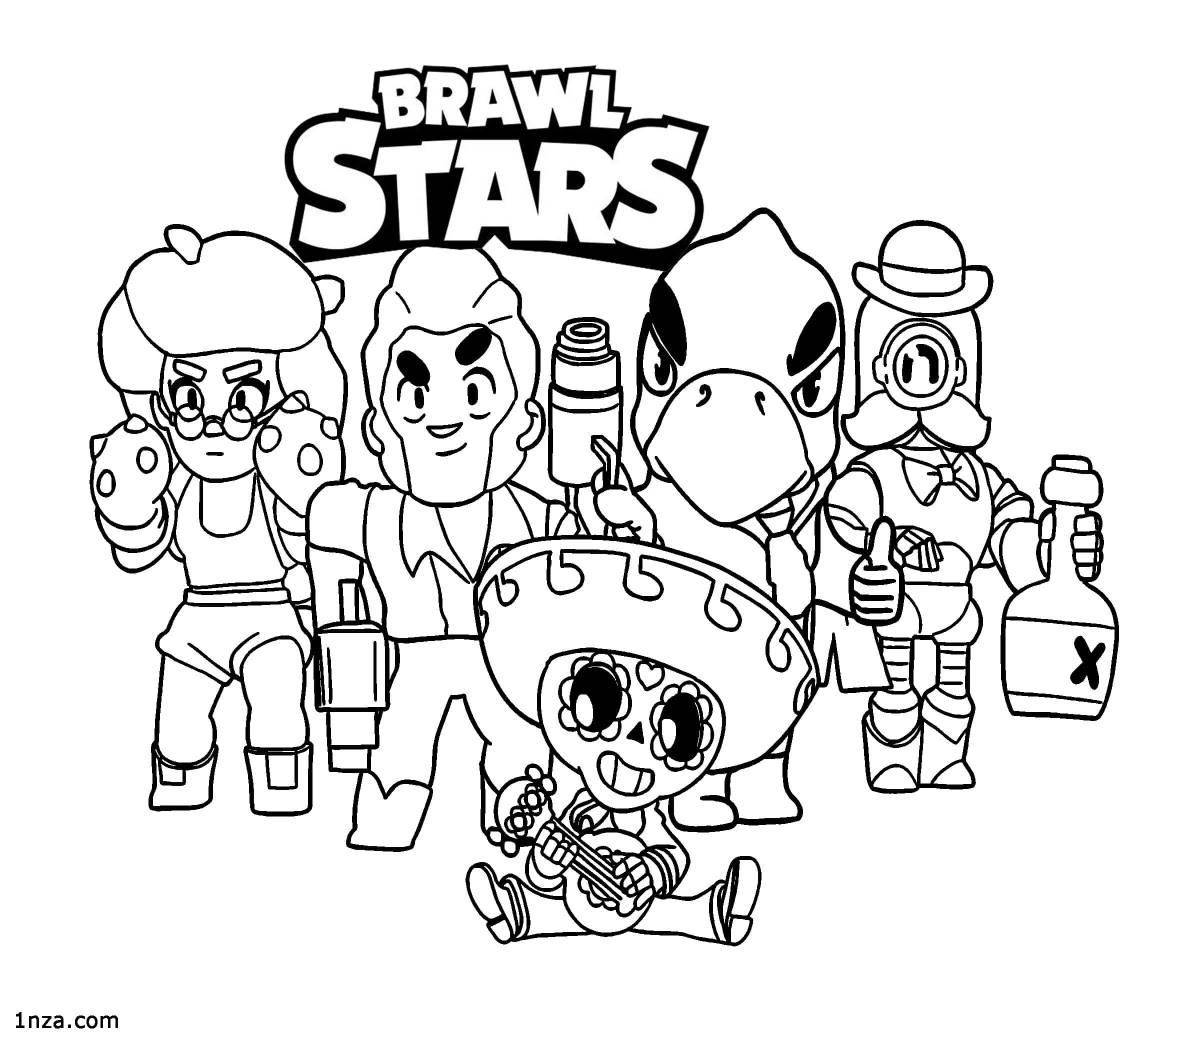 Wonderful brawl stars coloring page